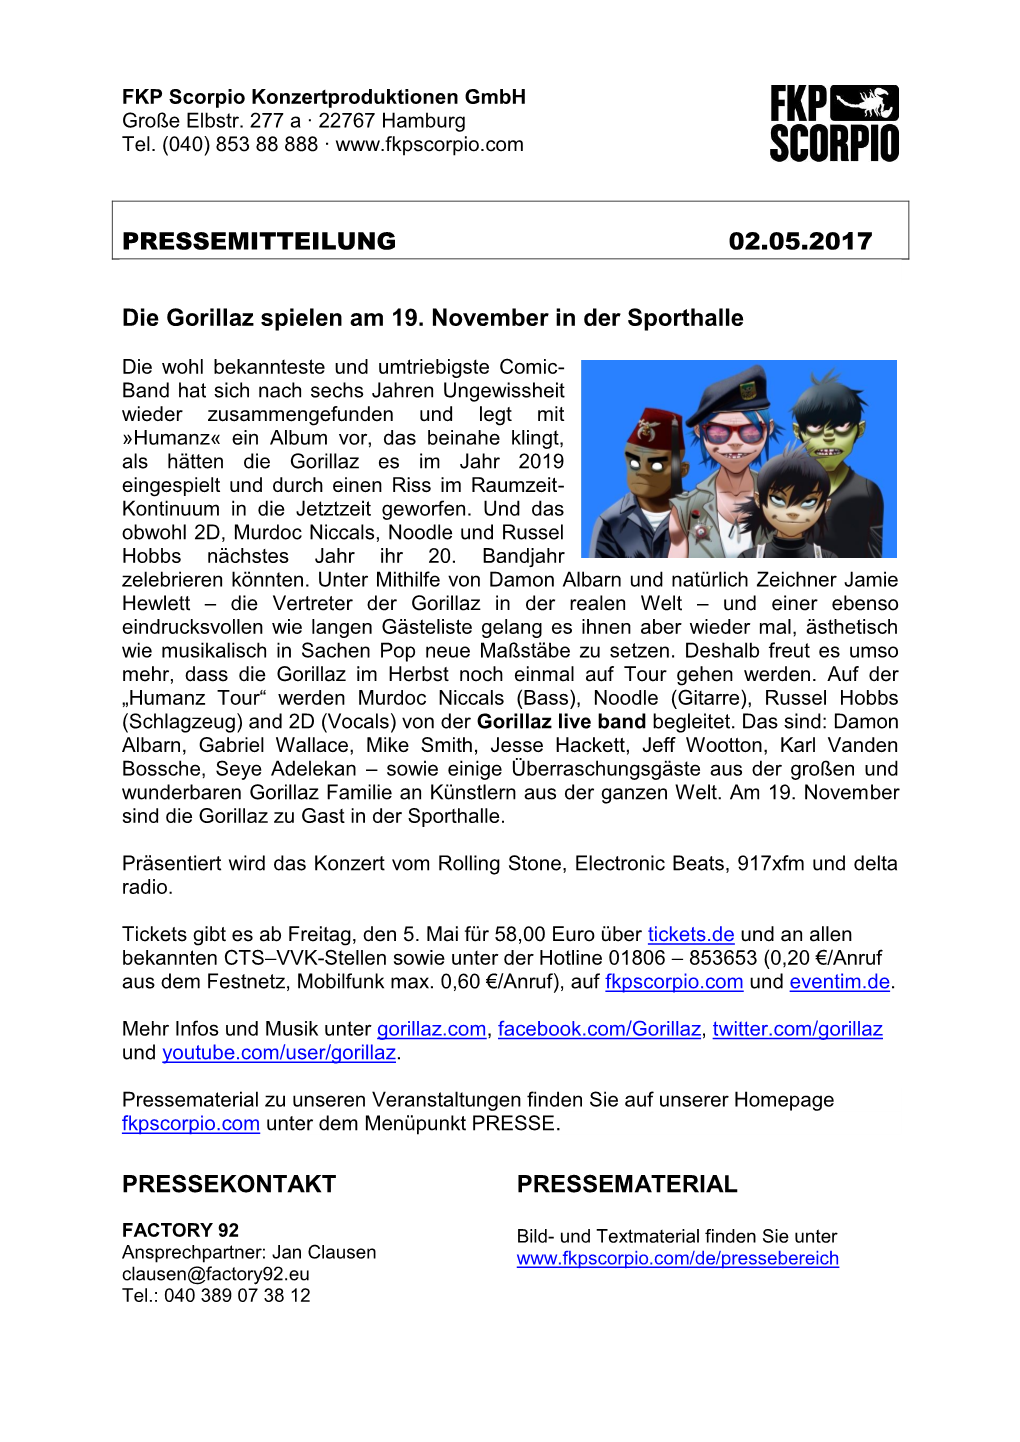 PM-GORILLAZ-02.05.2017 PDF PRESSEMATERIAL Download